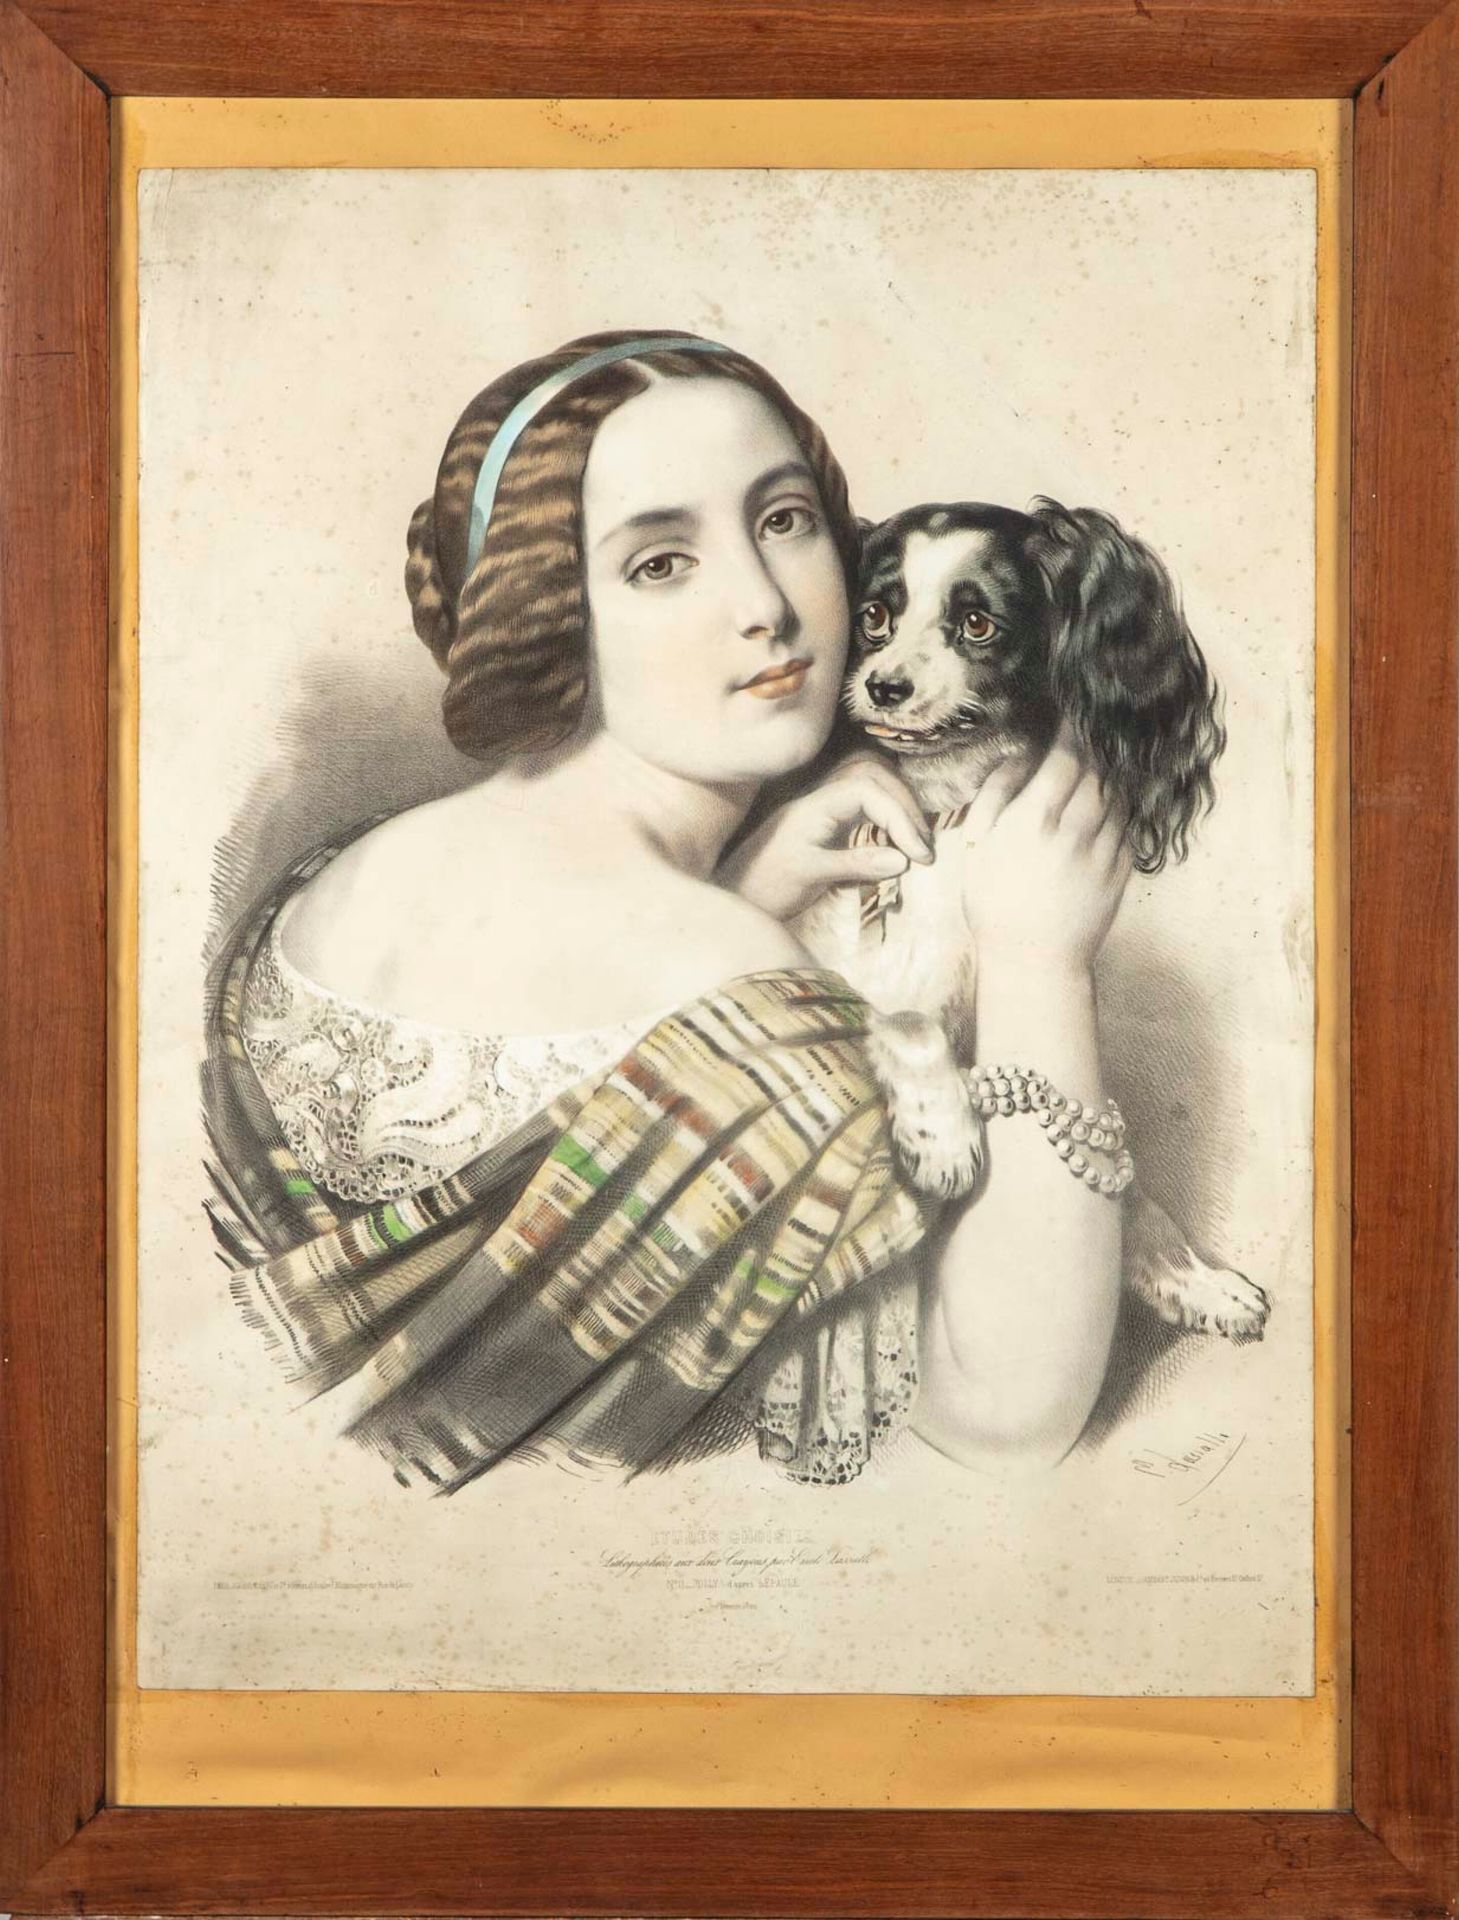 LEPAULE After Lépaule, engraved by Emile Lassalle

Jolly, Portrait of a Woman wi&hellip;